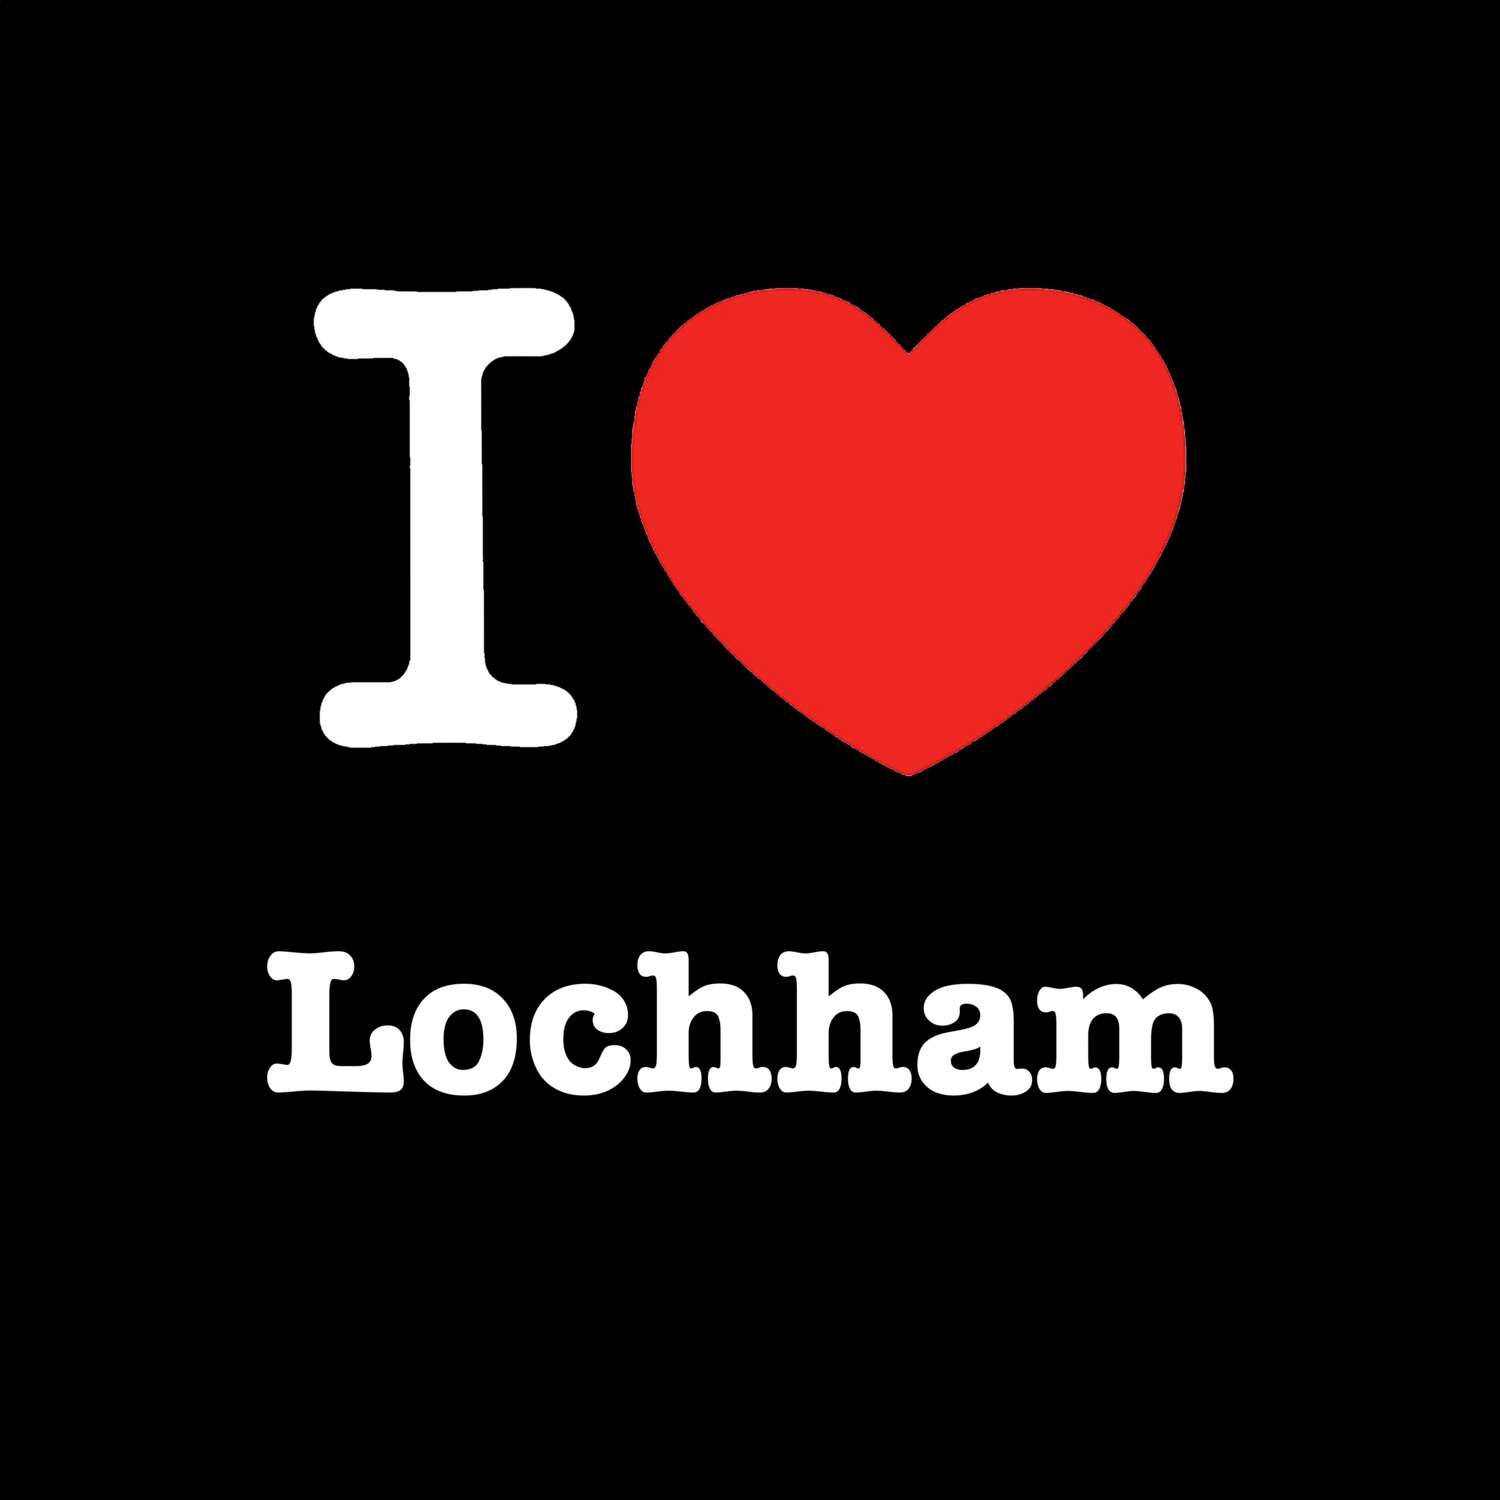 Lochham T-Shirt »I love«